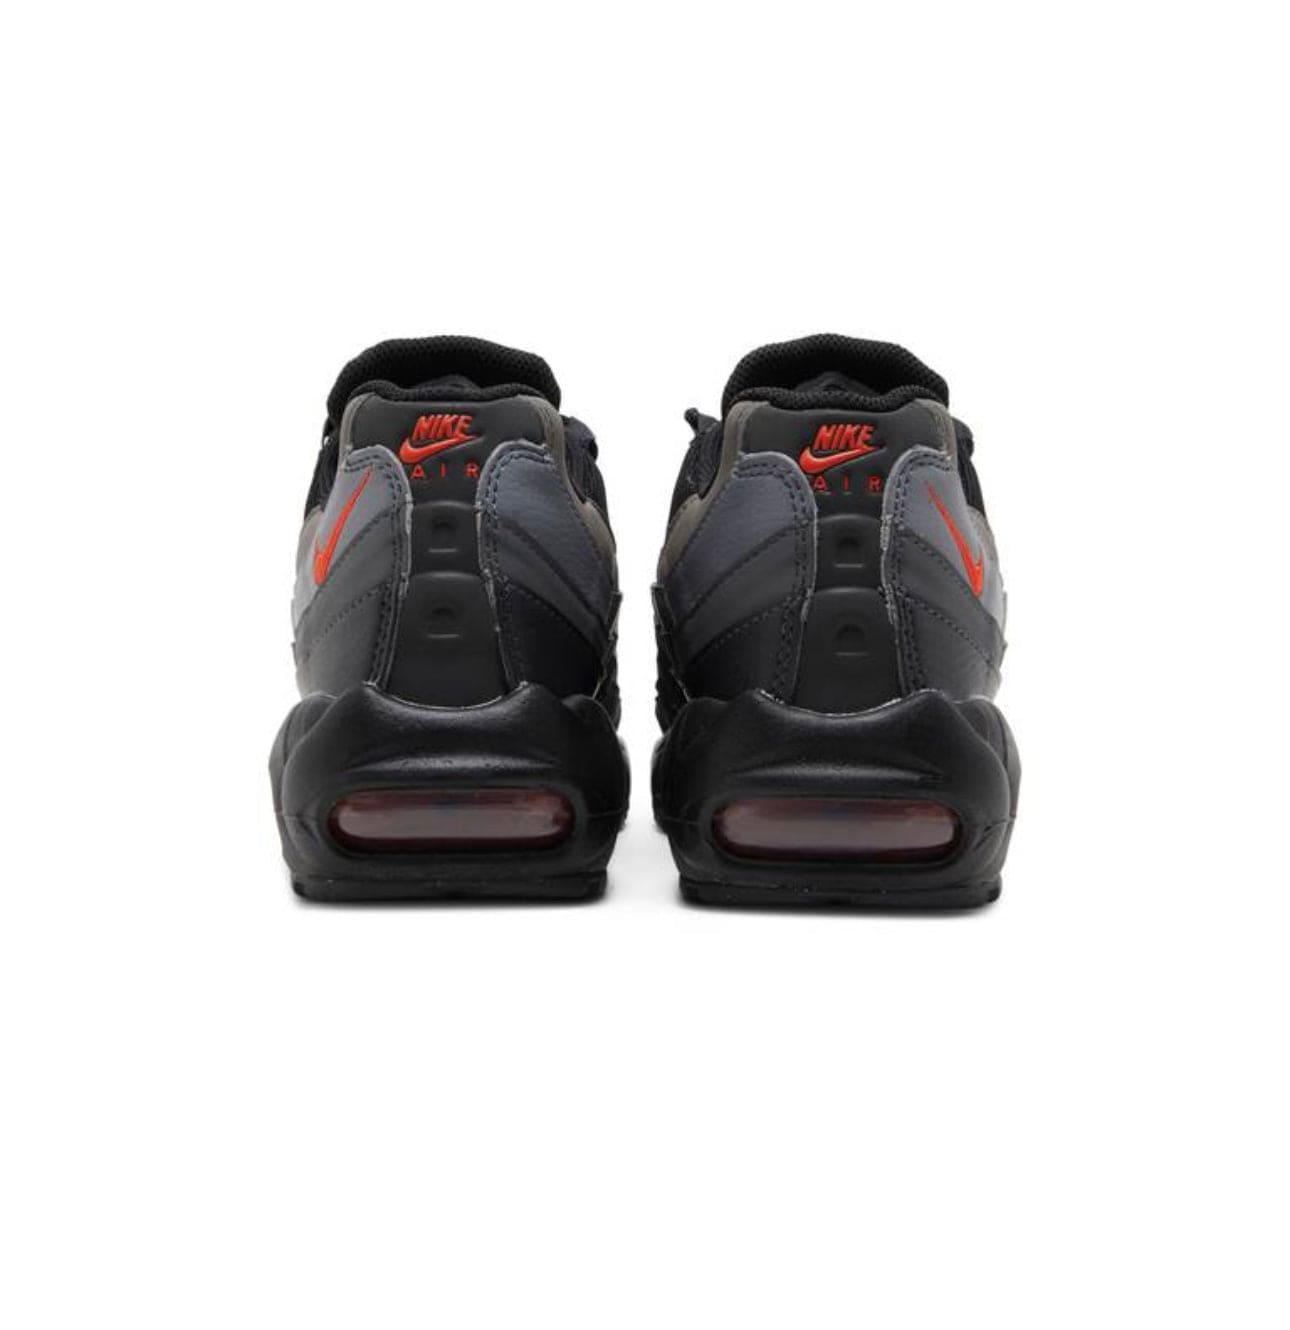 sneakers Men's US10 / Women's 11.5 Air Max 95 Black Picante Reflective FD0663-002